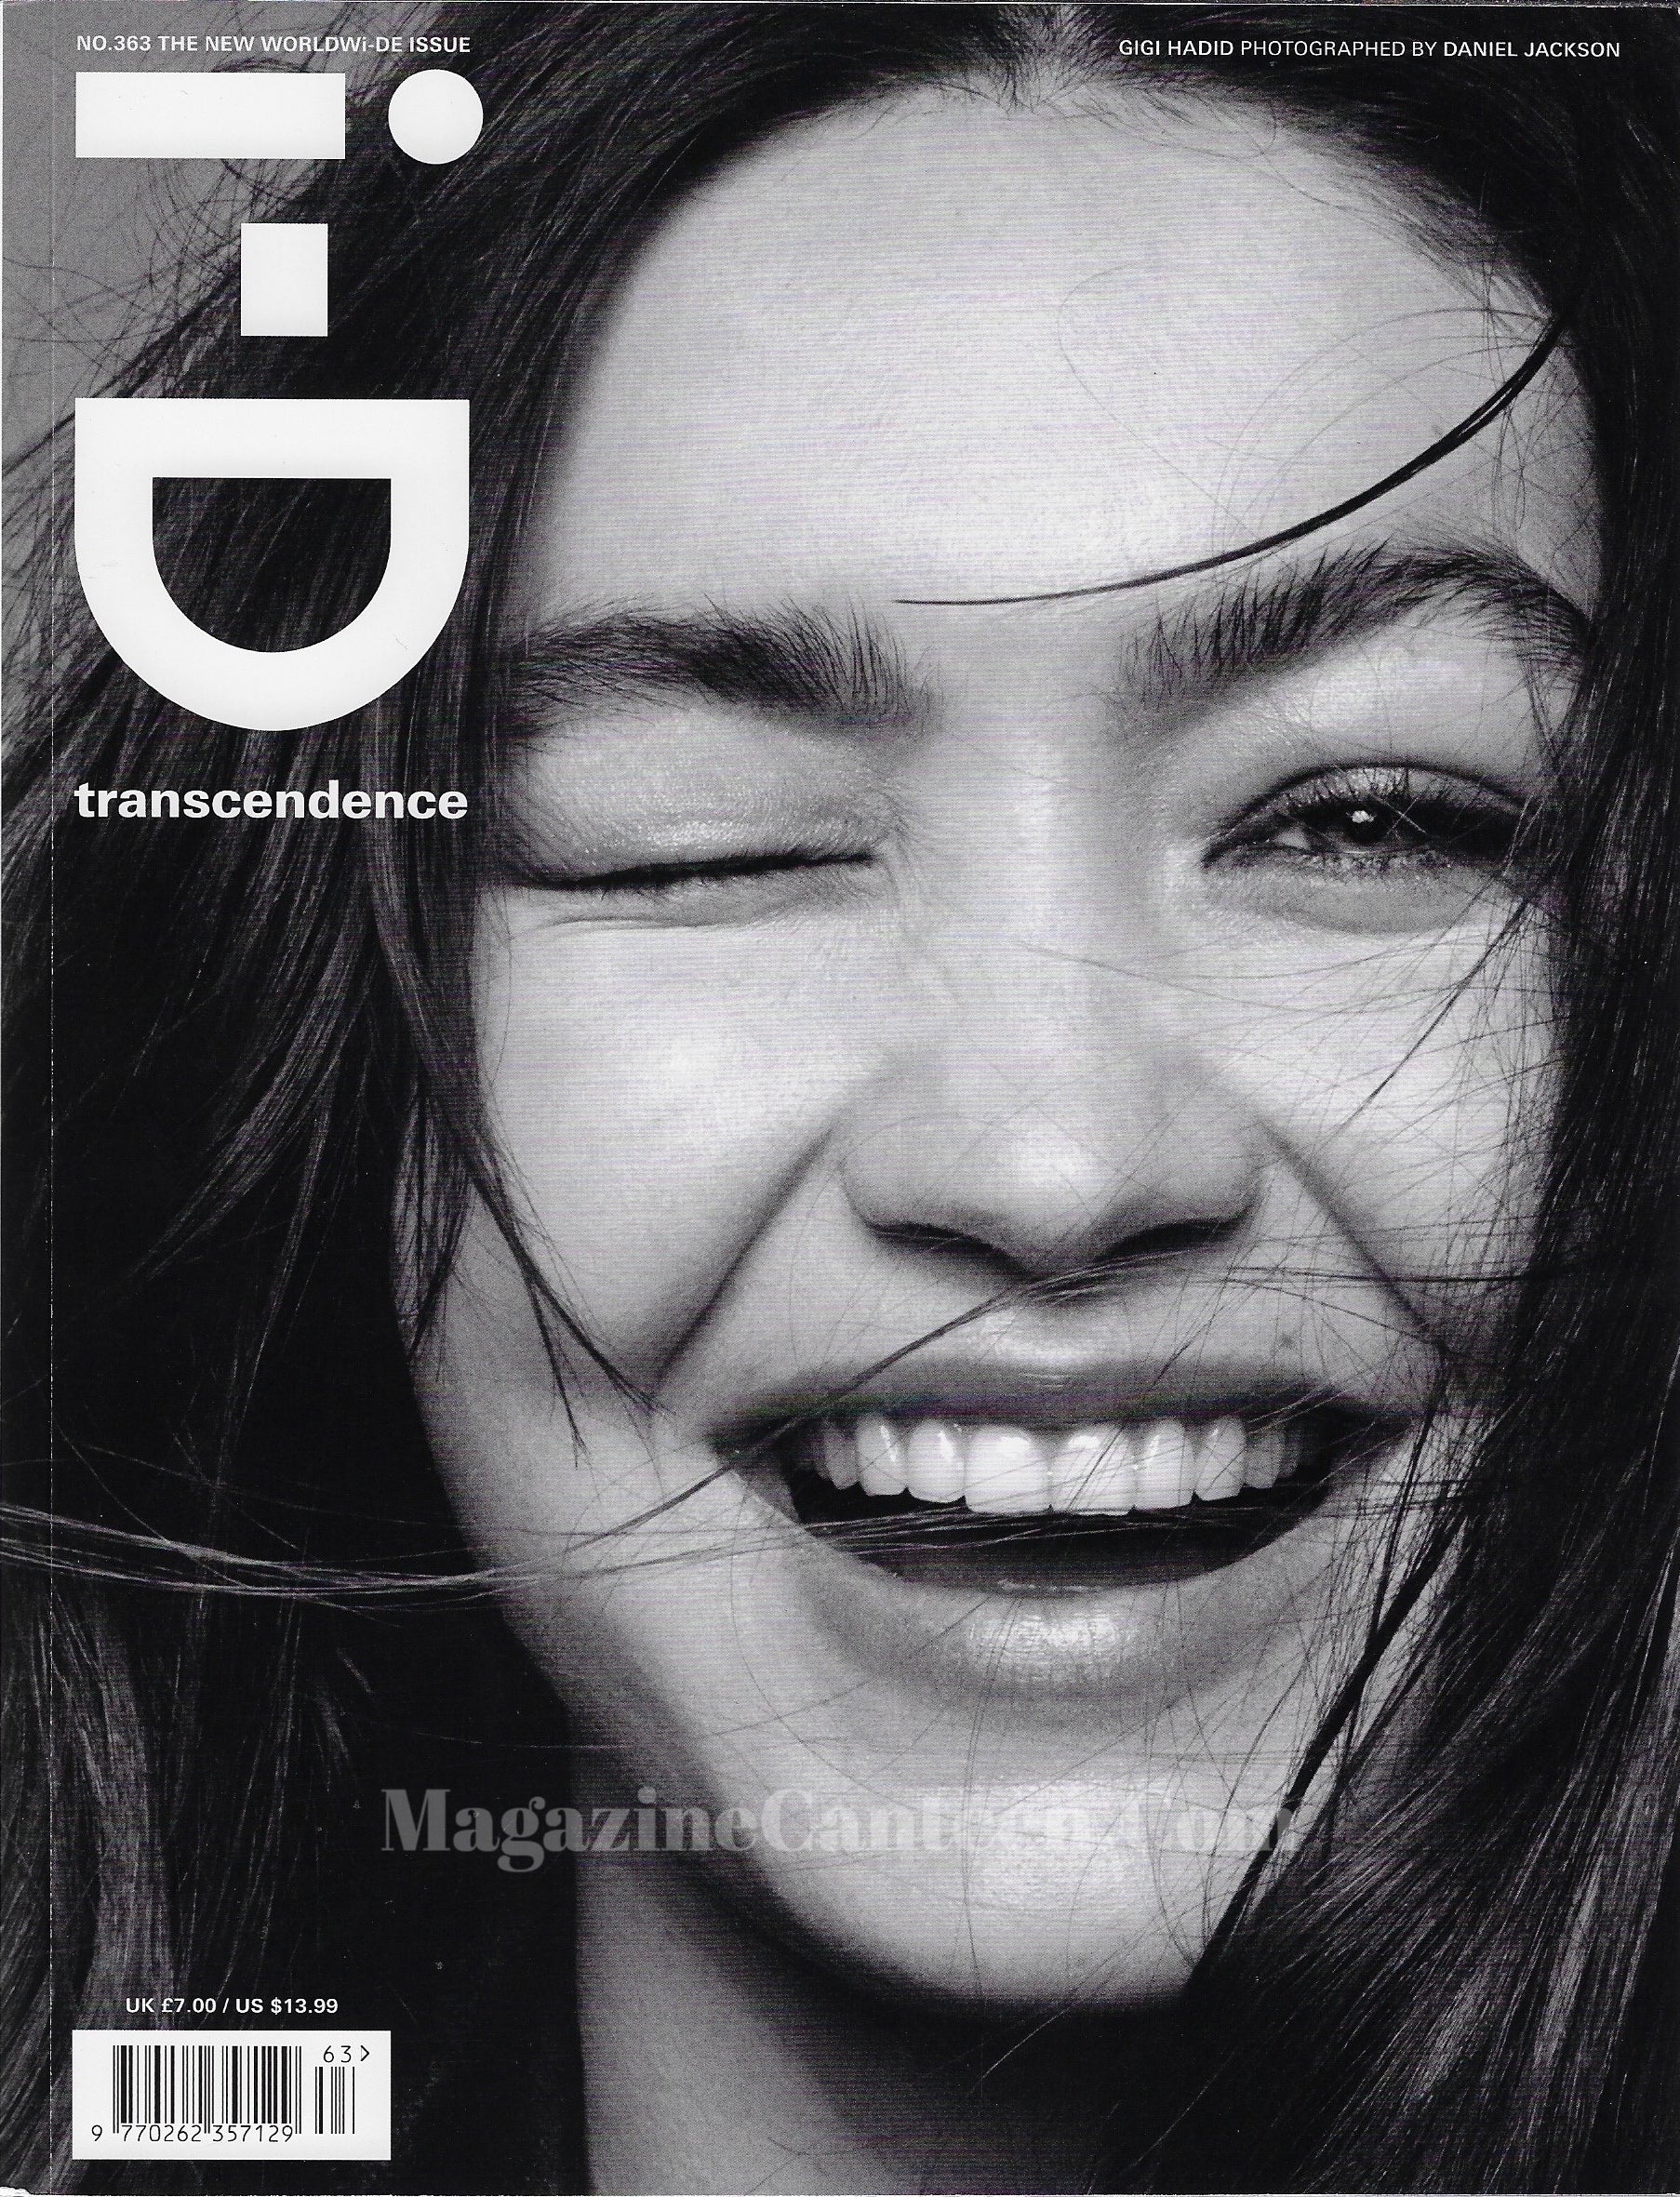 I-D Magazine 363 - Gigi Hadid 2021